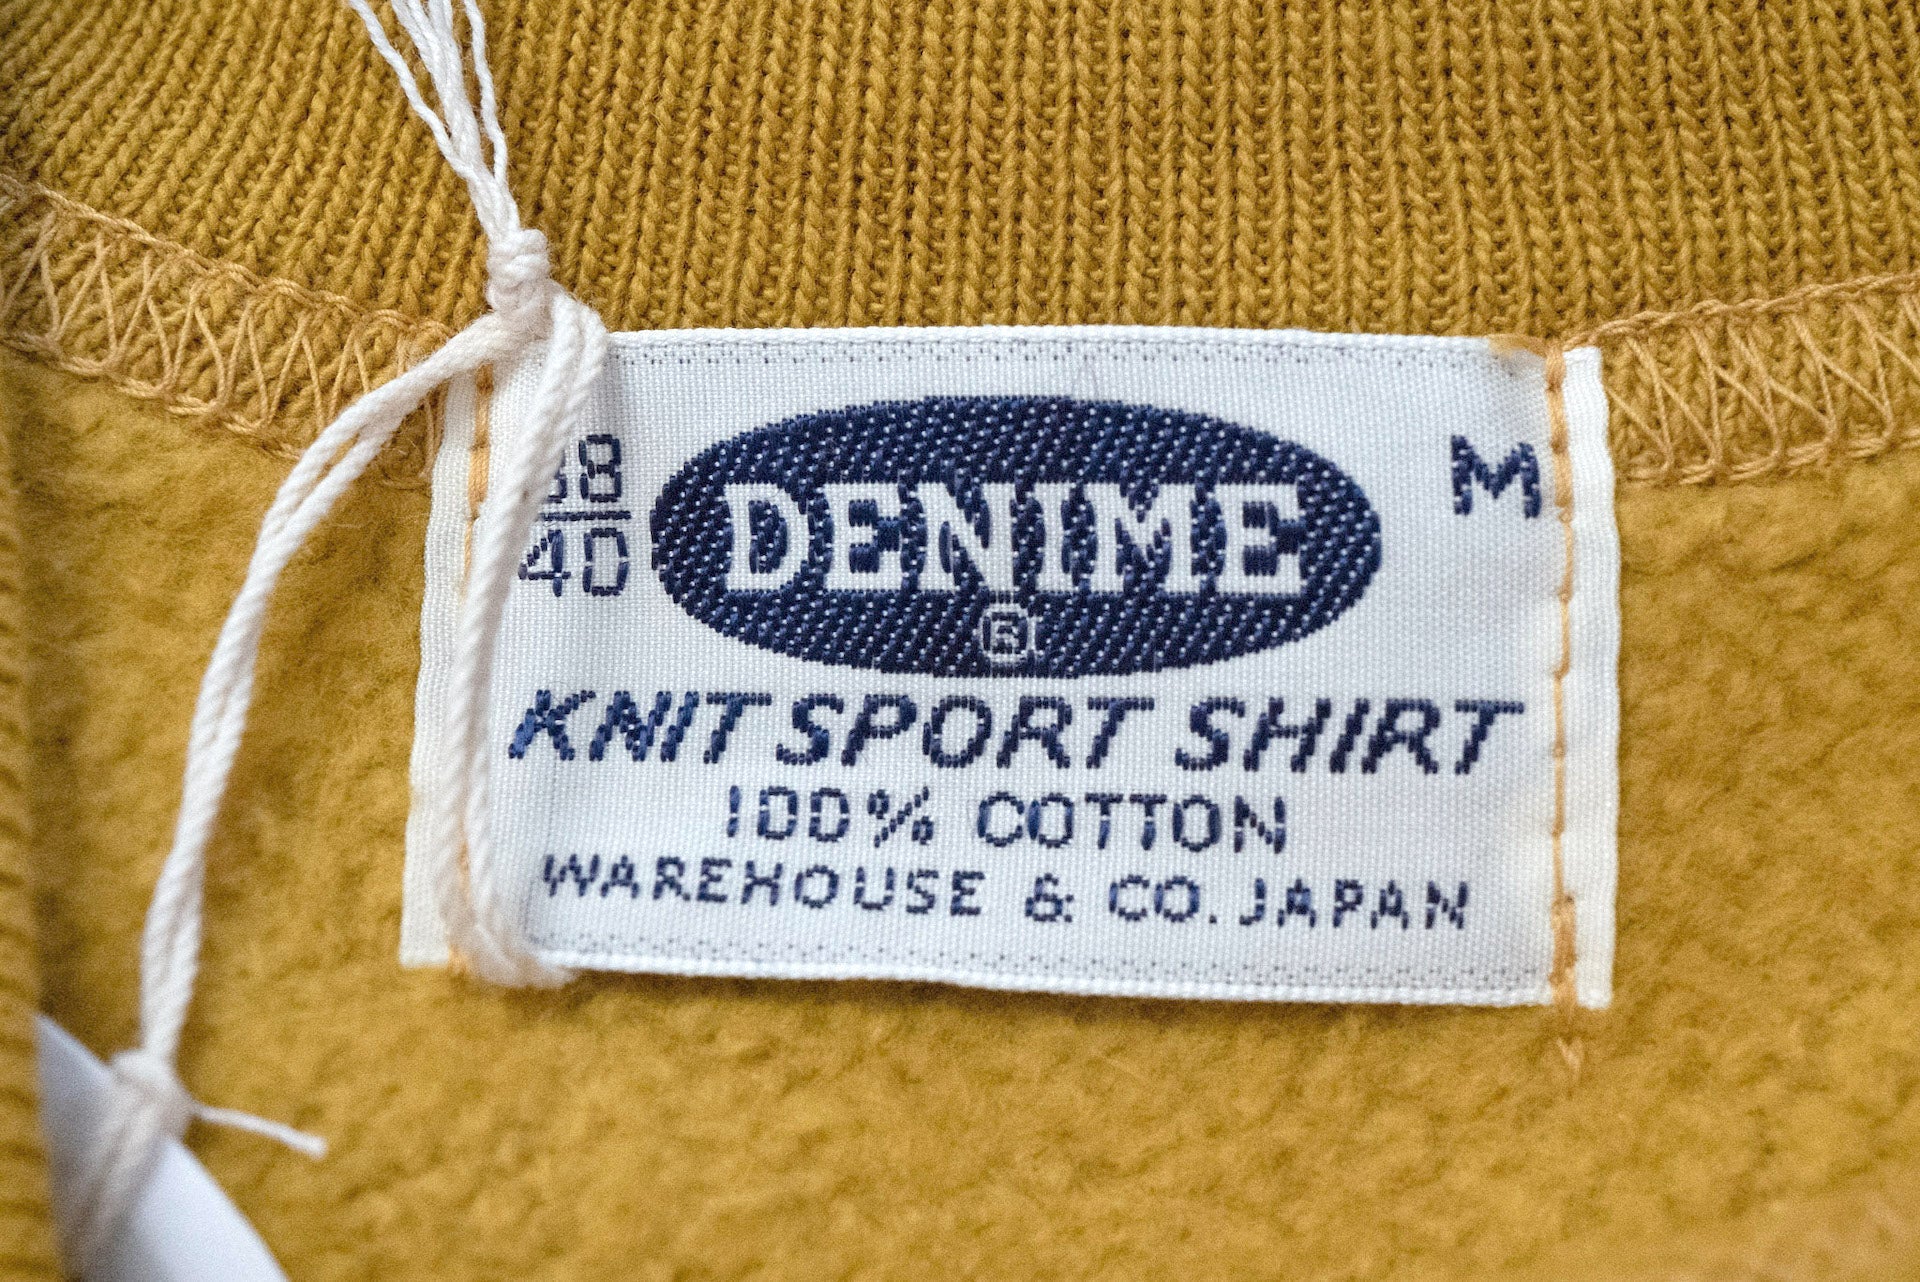 Denime X Warehouse Co Lot.260 10oz "Standard" Loopwheeled Sweatshirt (Yellow)